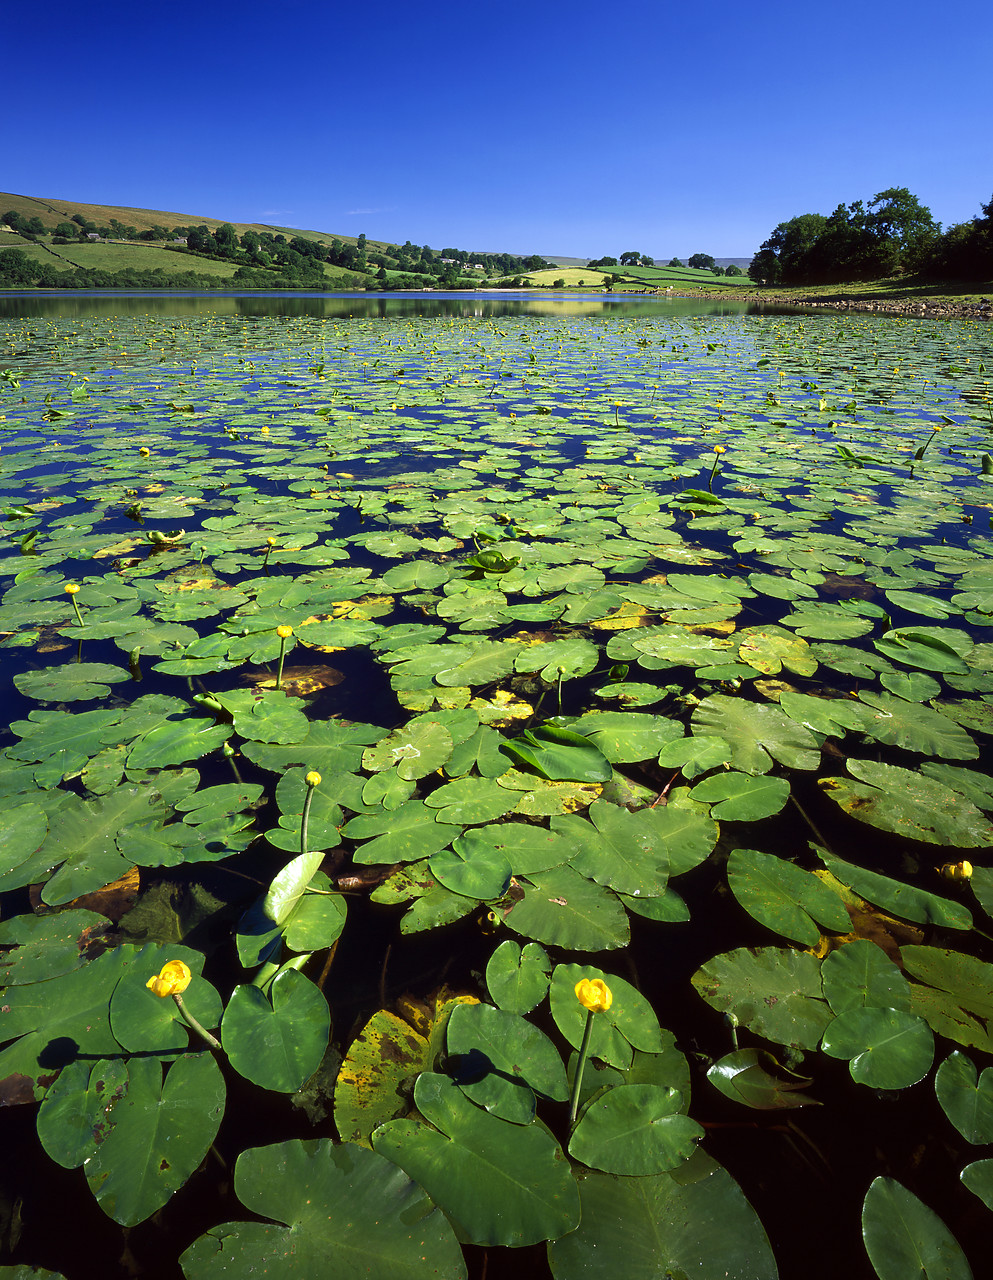 #060775-2 - Lily pads on Semer Water, near Bainbridge, North Yorkshire, England